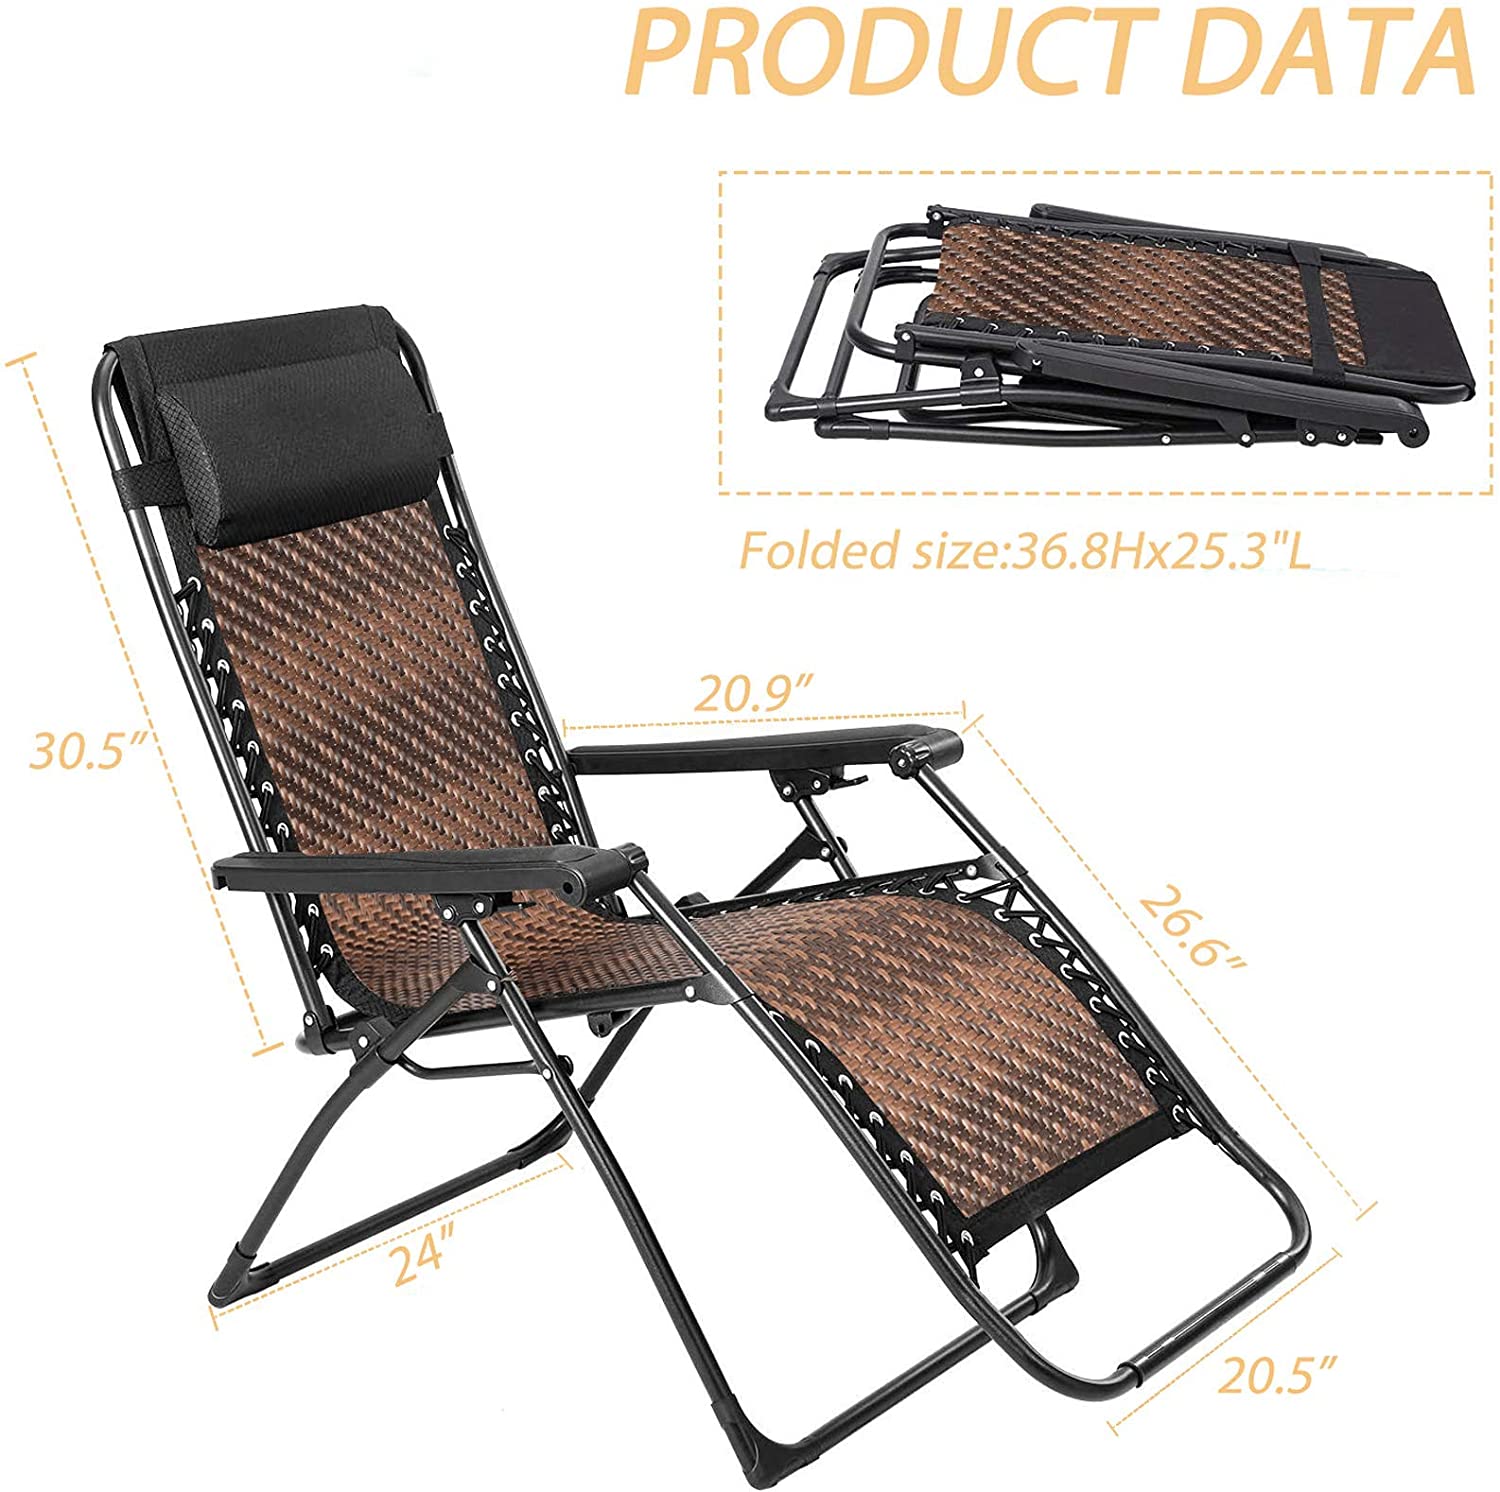 SOLAURA Outdoor Zero Gravity Lounge Chair Patio Adjustable Folding Wicker Recliner - Brown - image 2 of 6